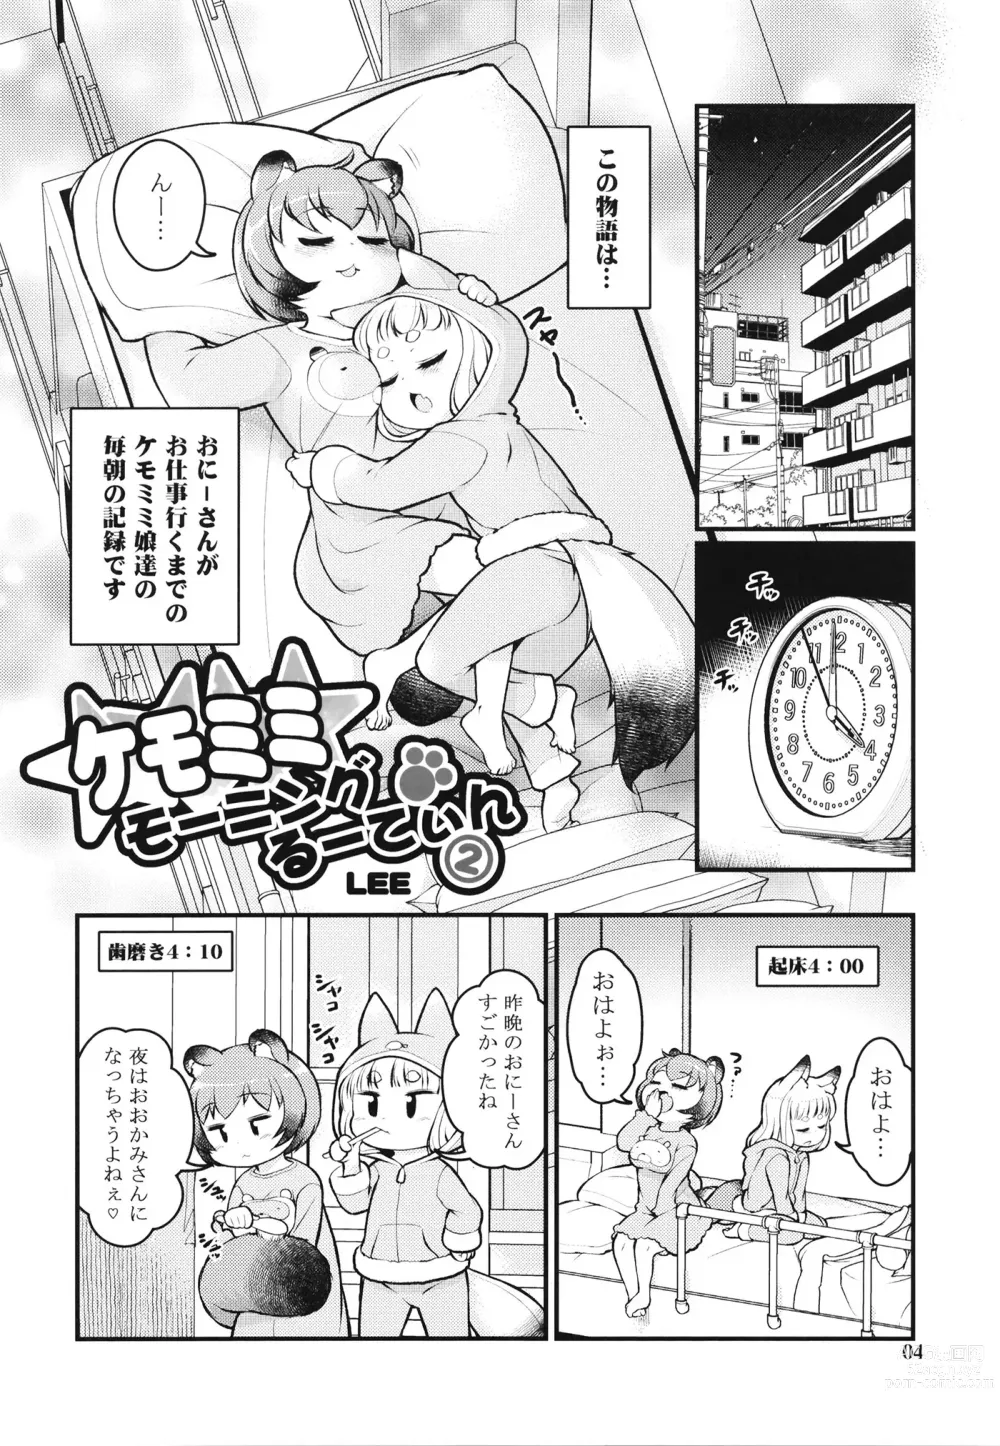 Page 3 of doujinshi KemoMimi Morning Routine 2